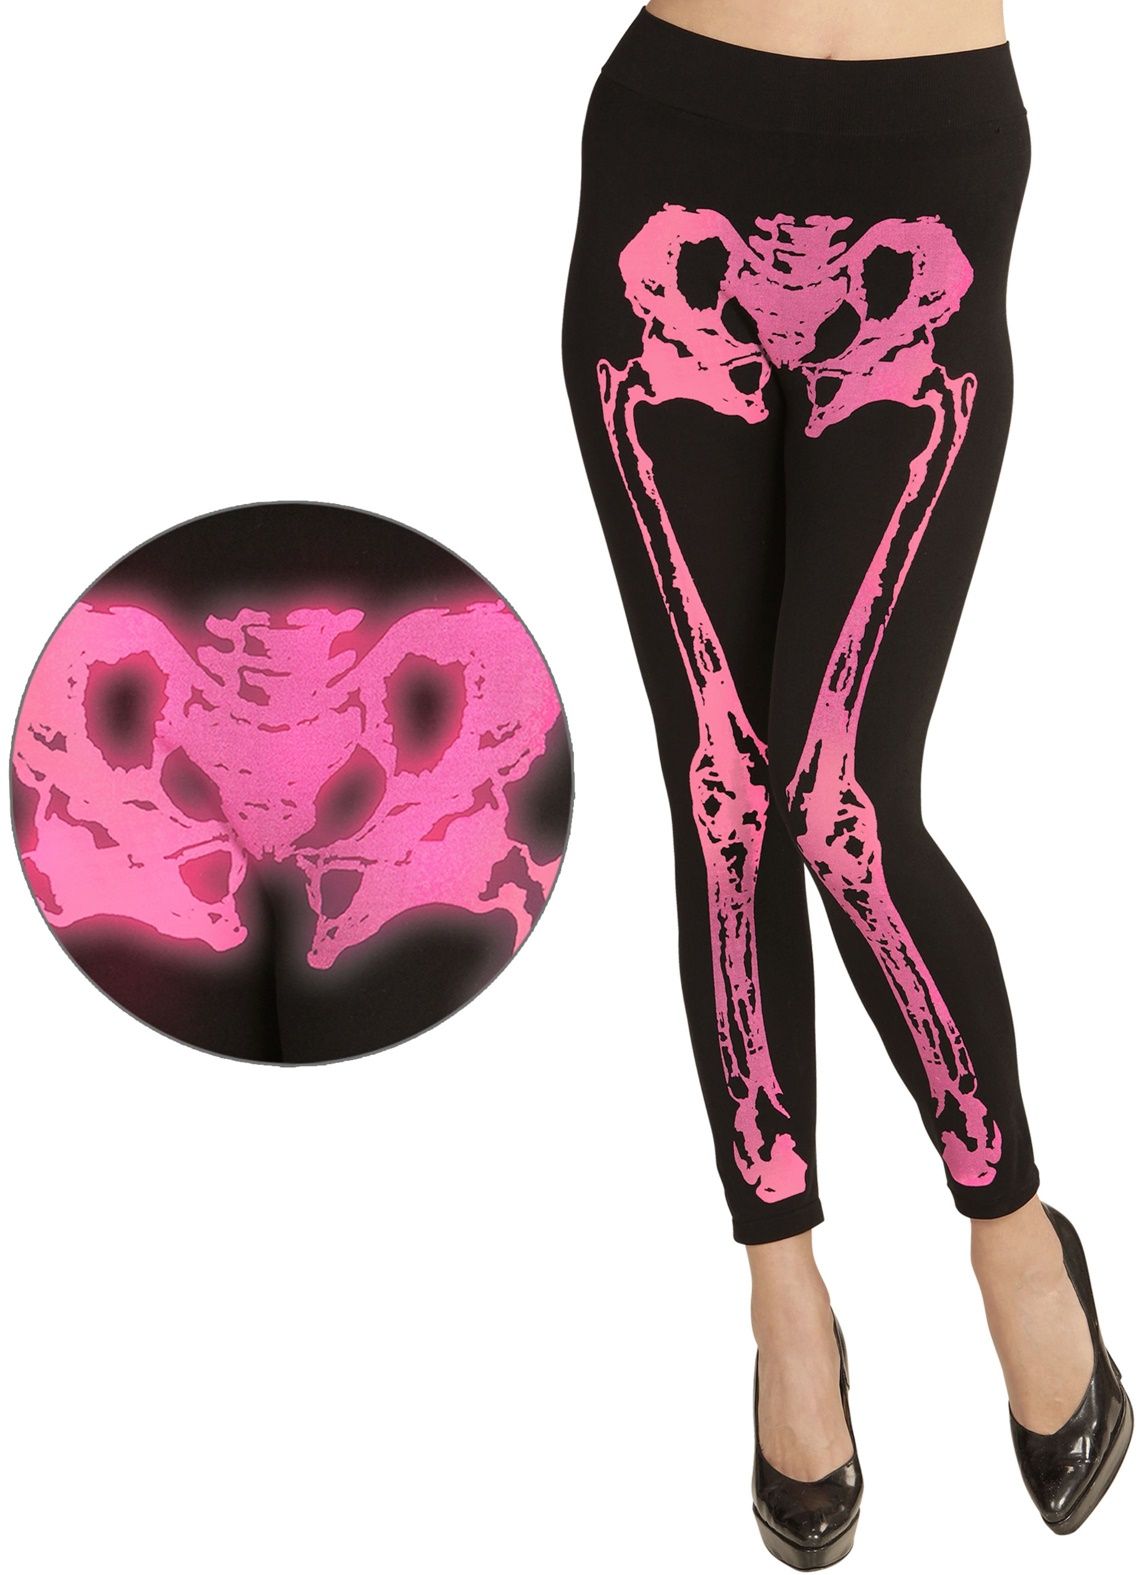 Neon roze skelet legging